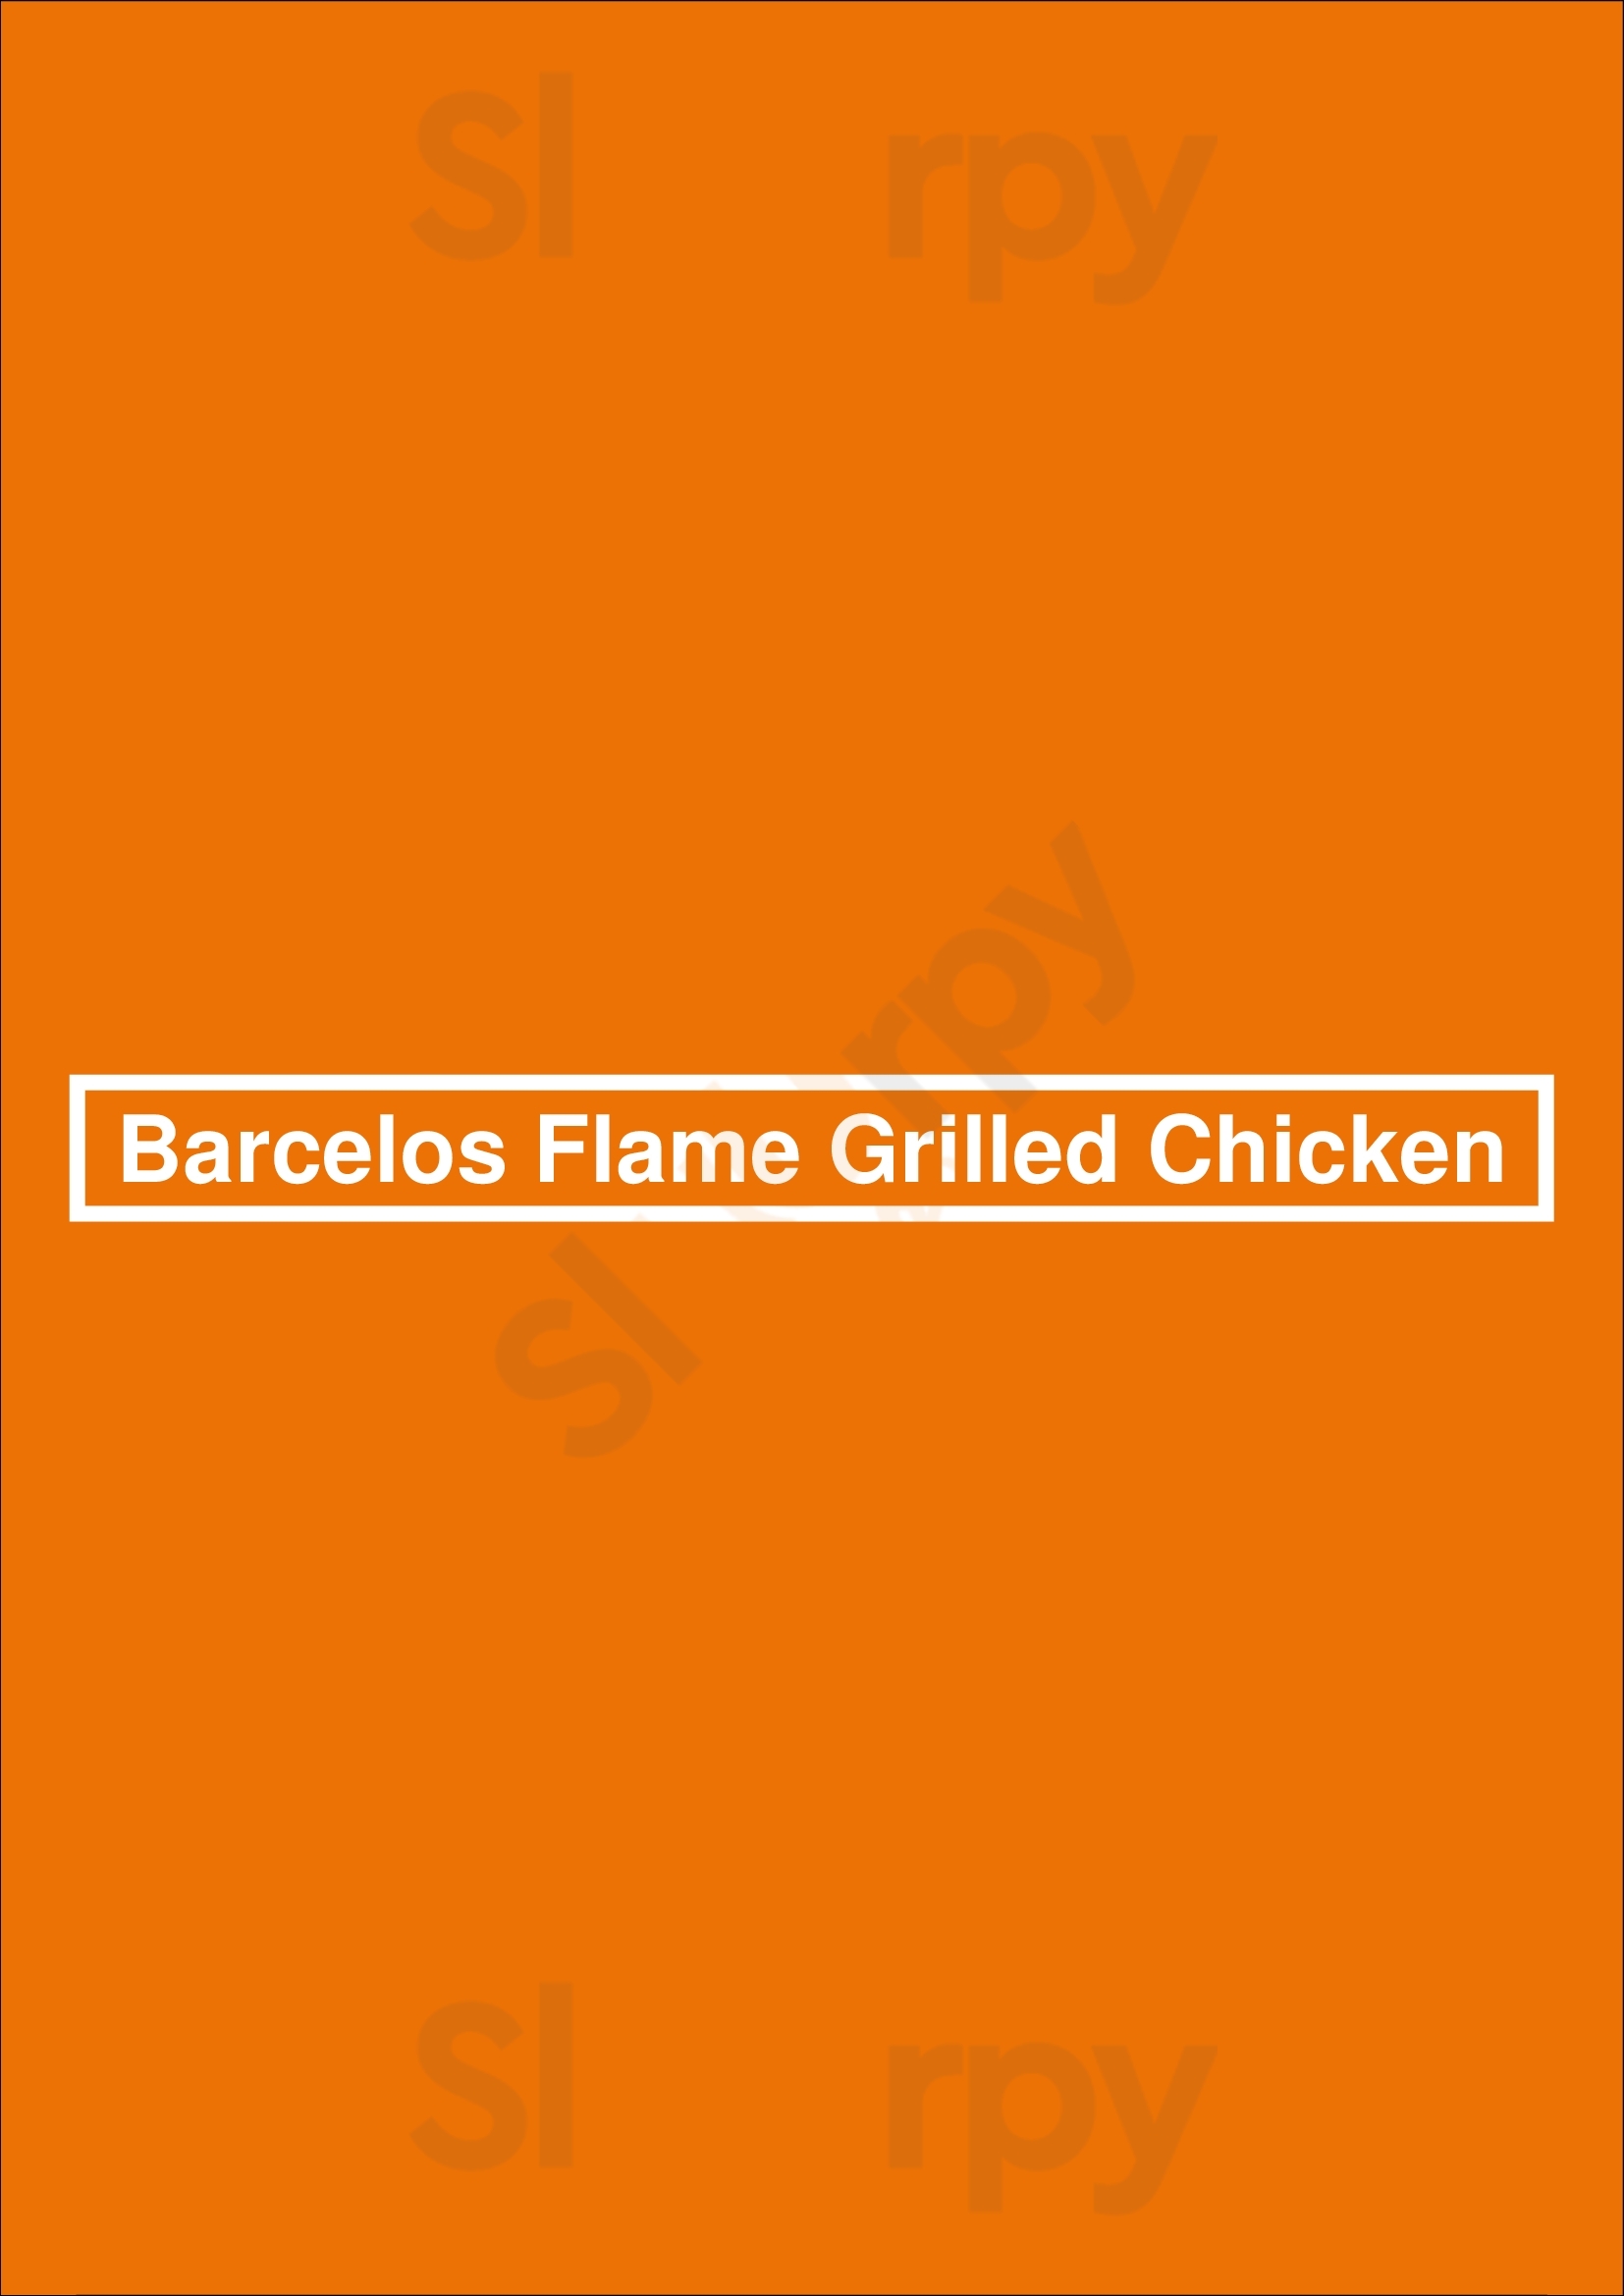 Barcelos Flame Grilled Chicken Surrey Menu - 1